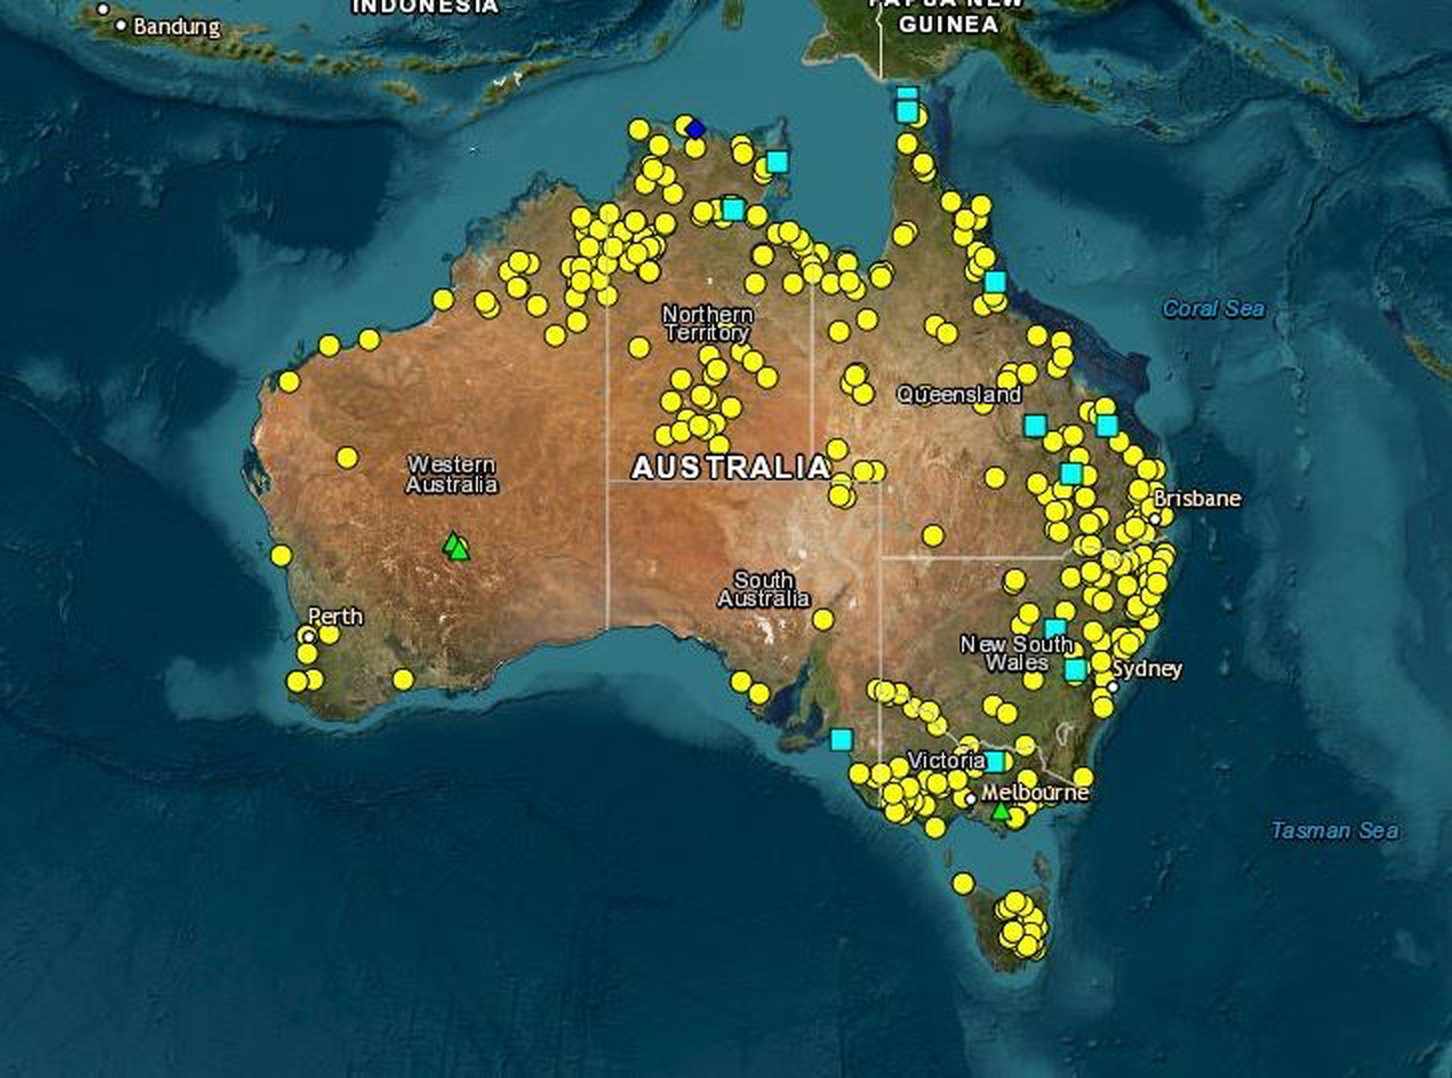 The University of Newcastle has been mapping massacres sites across Australia.